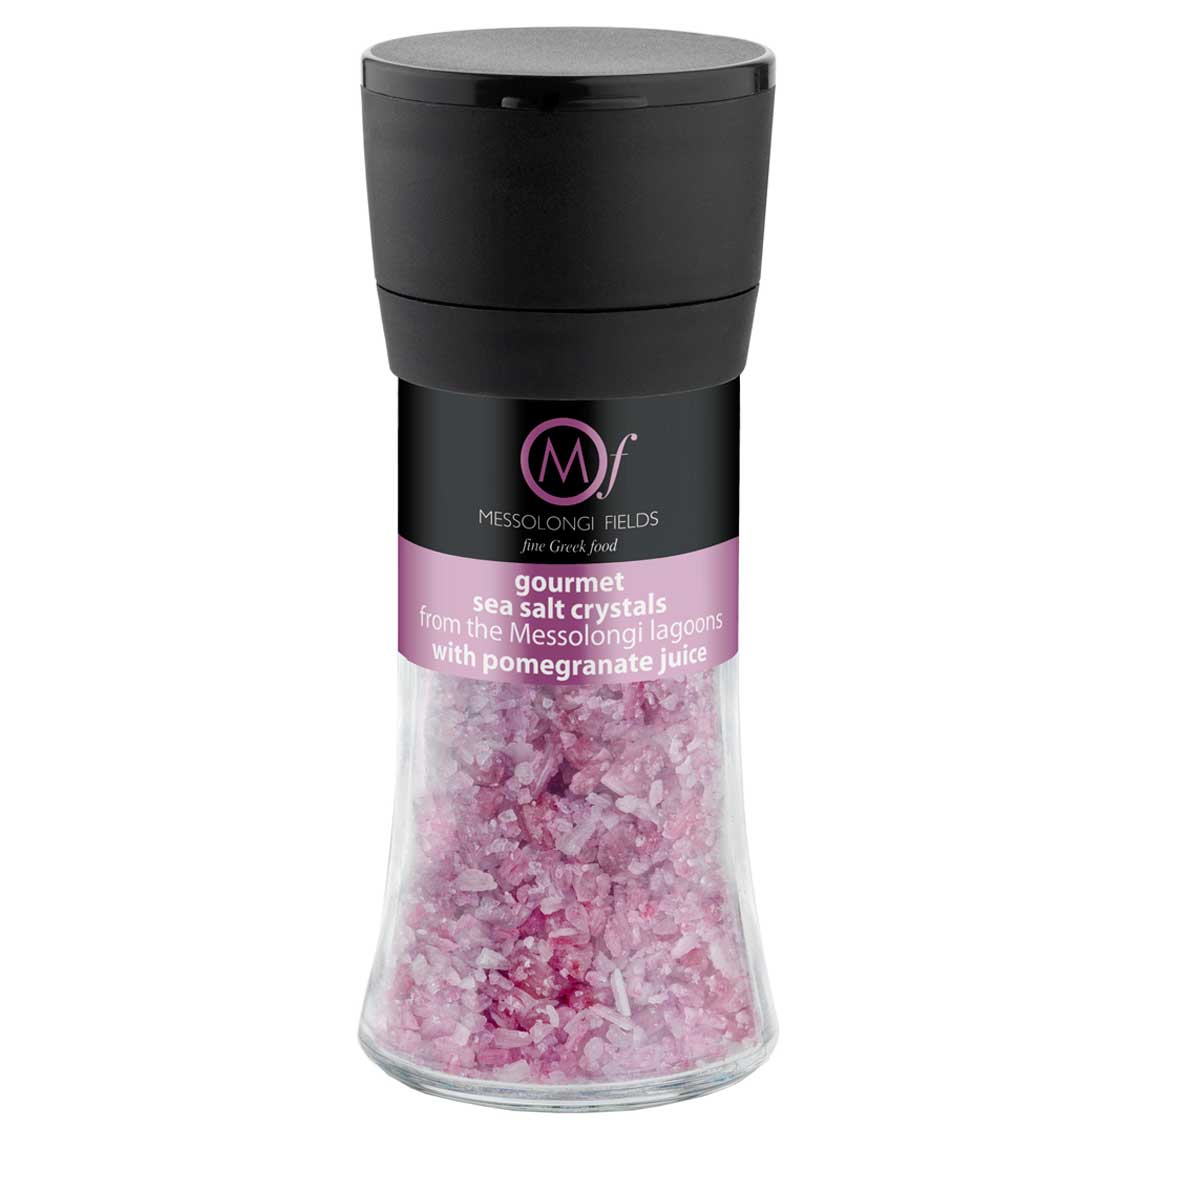 Gourmet Sea Salt Crystals with Pomegranate Juice, 95gr, "Messolongi Fields"